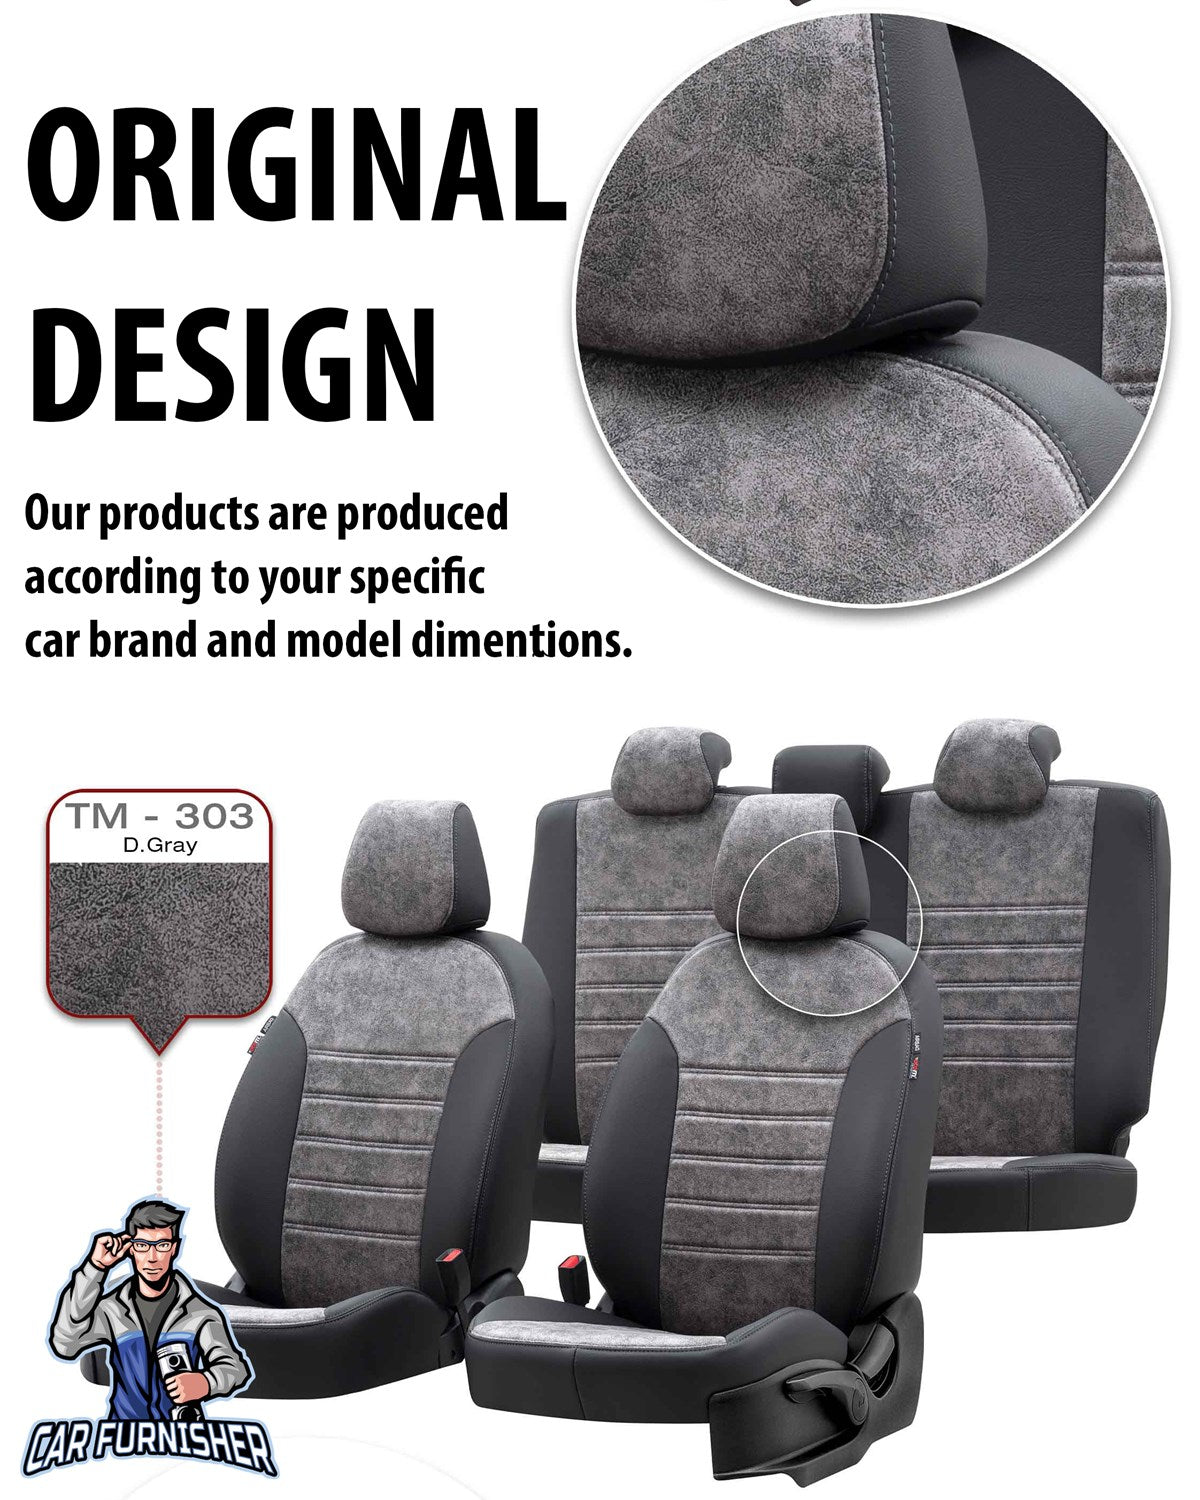 Fiat Brava Seat Covers Milano Suede Design Beige Leather & Suede Fabric